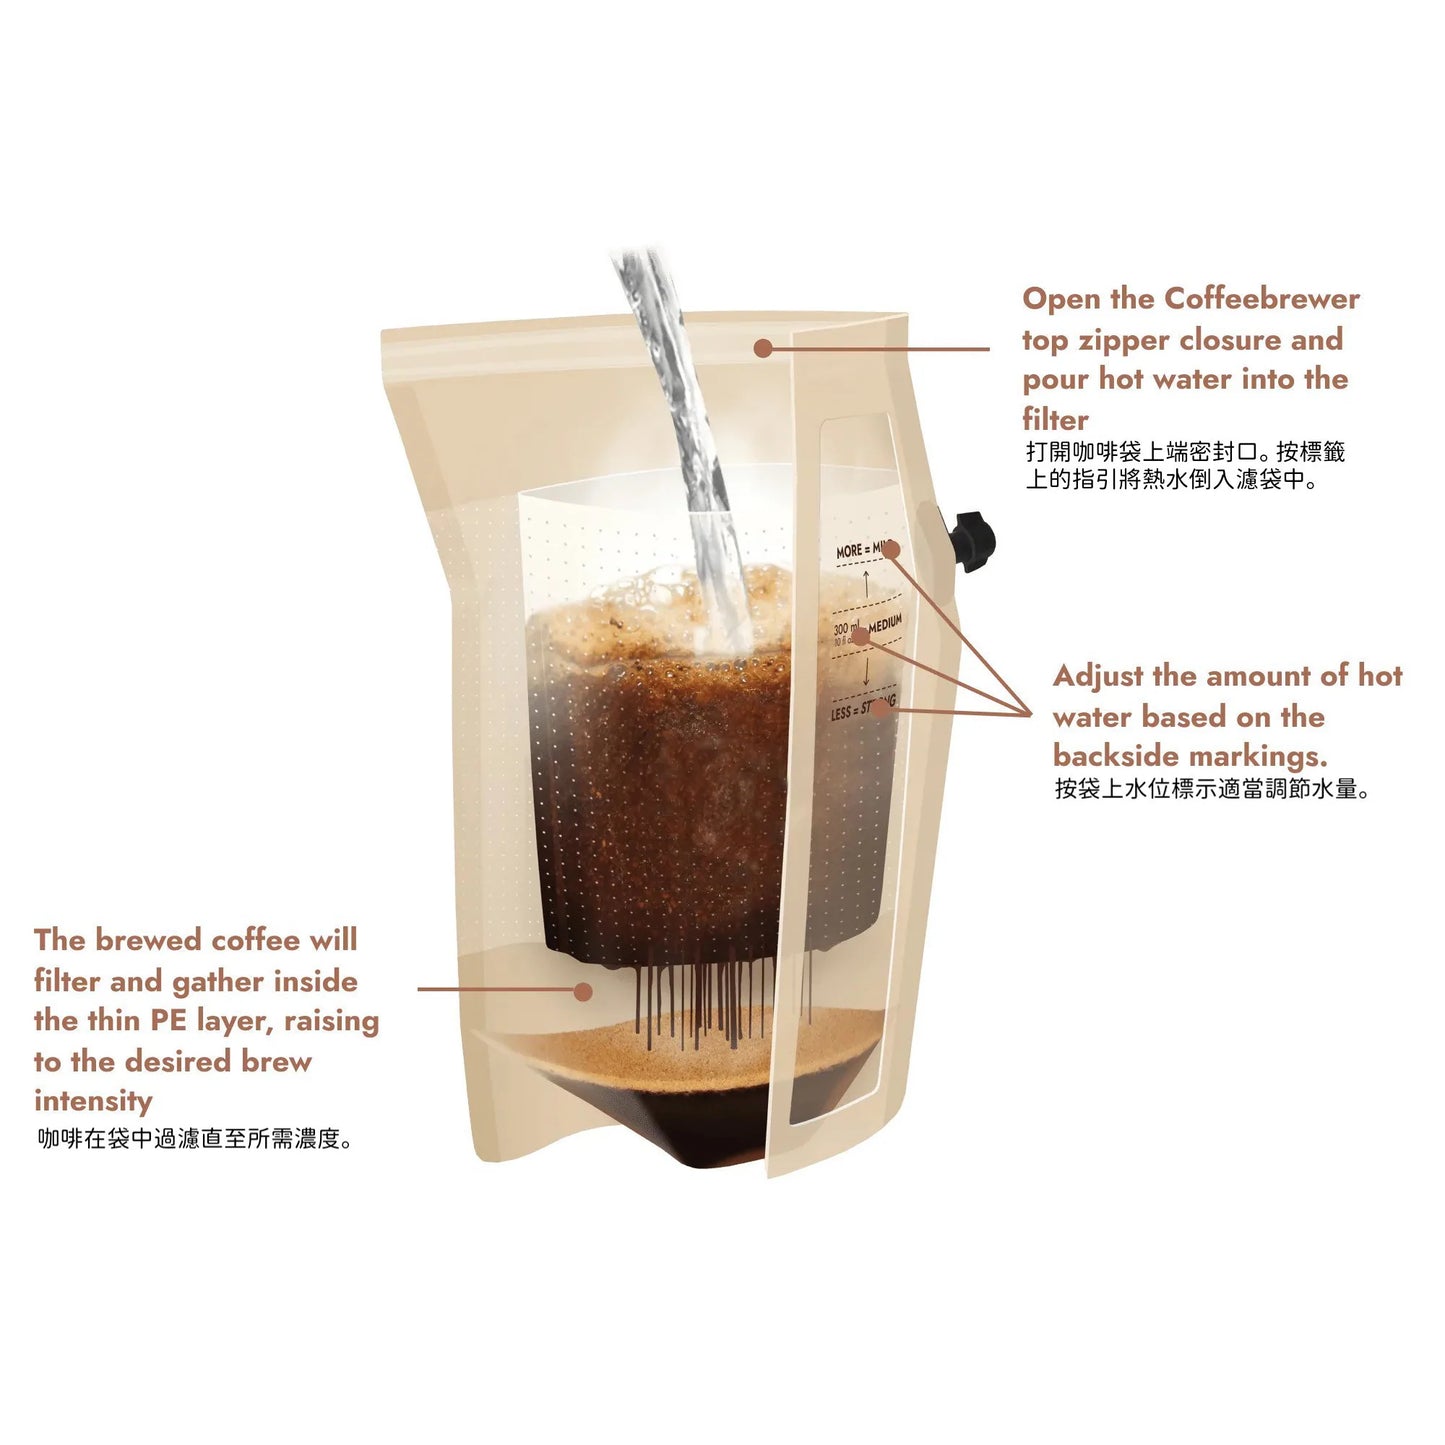 Grower’s Cup Coffeebrewer (Ethiopia 埃塞俄比亞) 便攜式手沖有機及公平交易咖啡包 20g